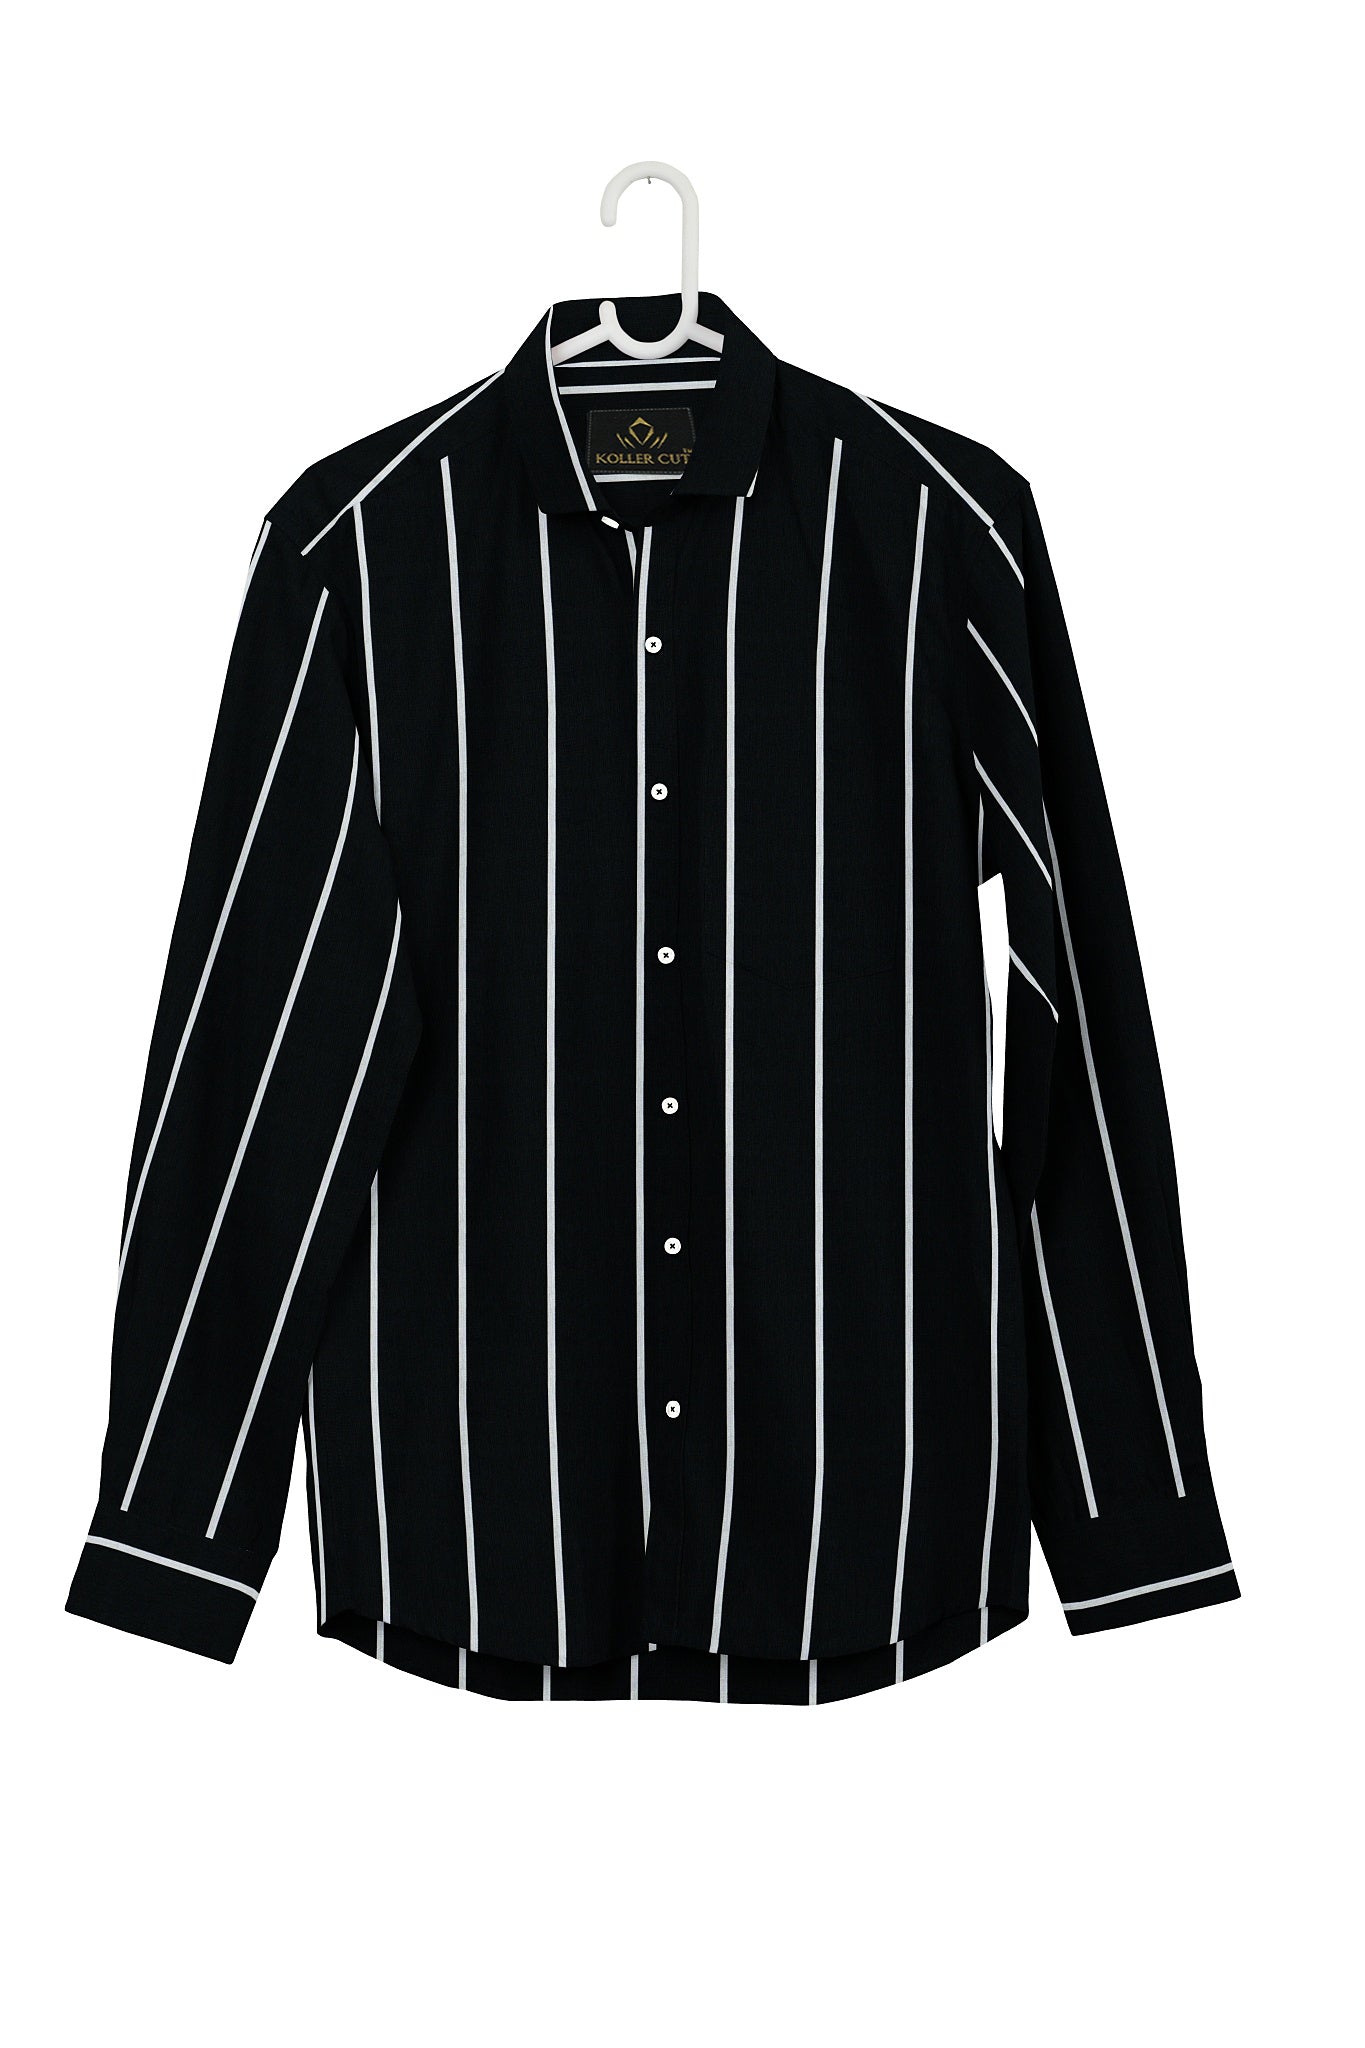 Jade Black and White Stripes Cotton Shirt